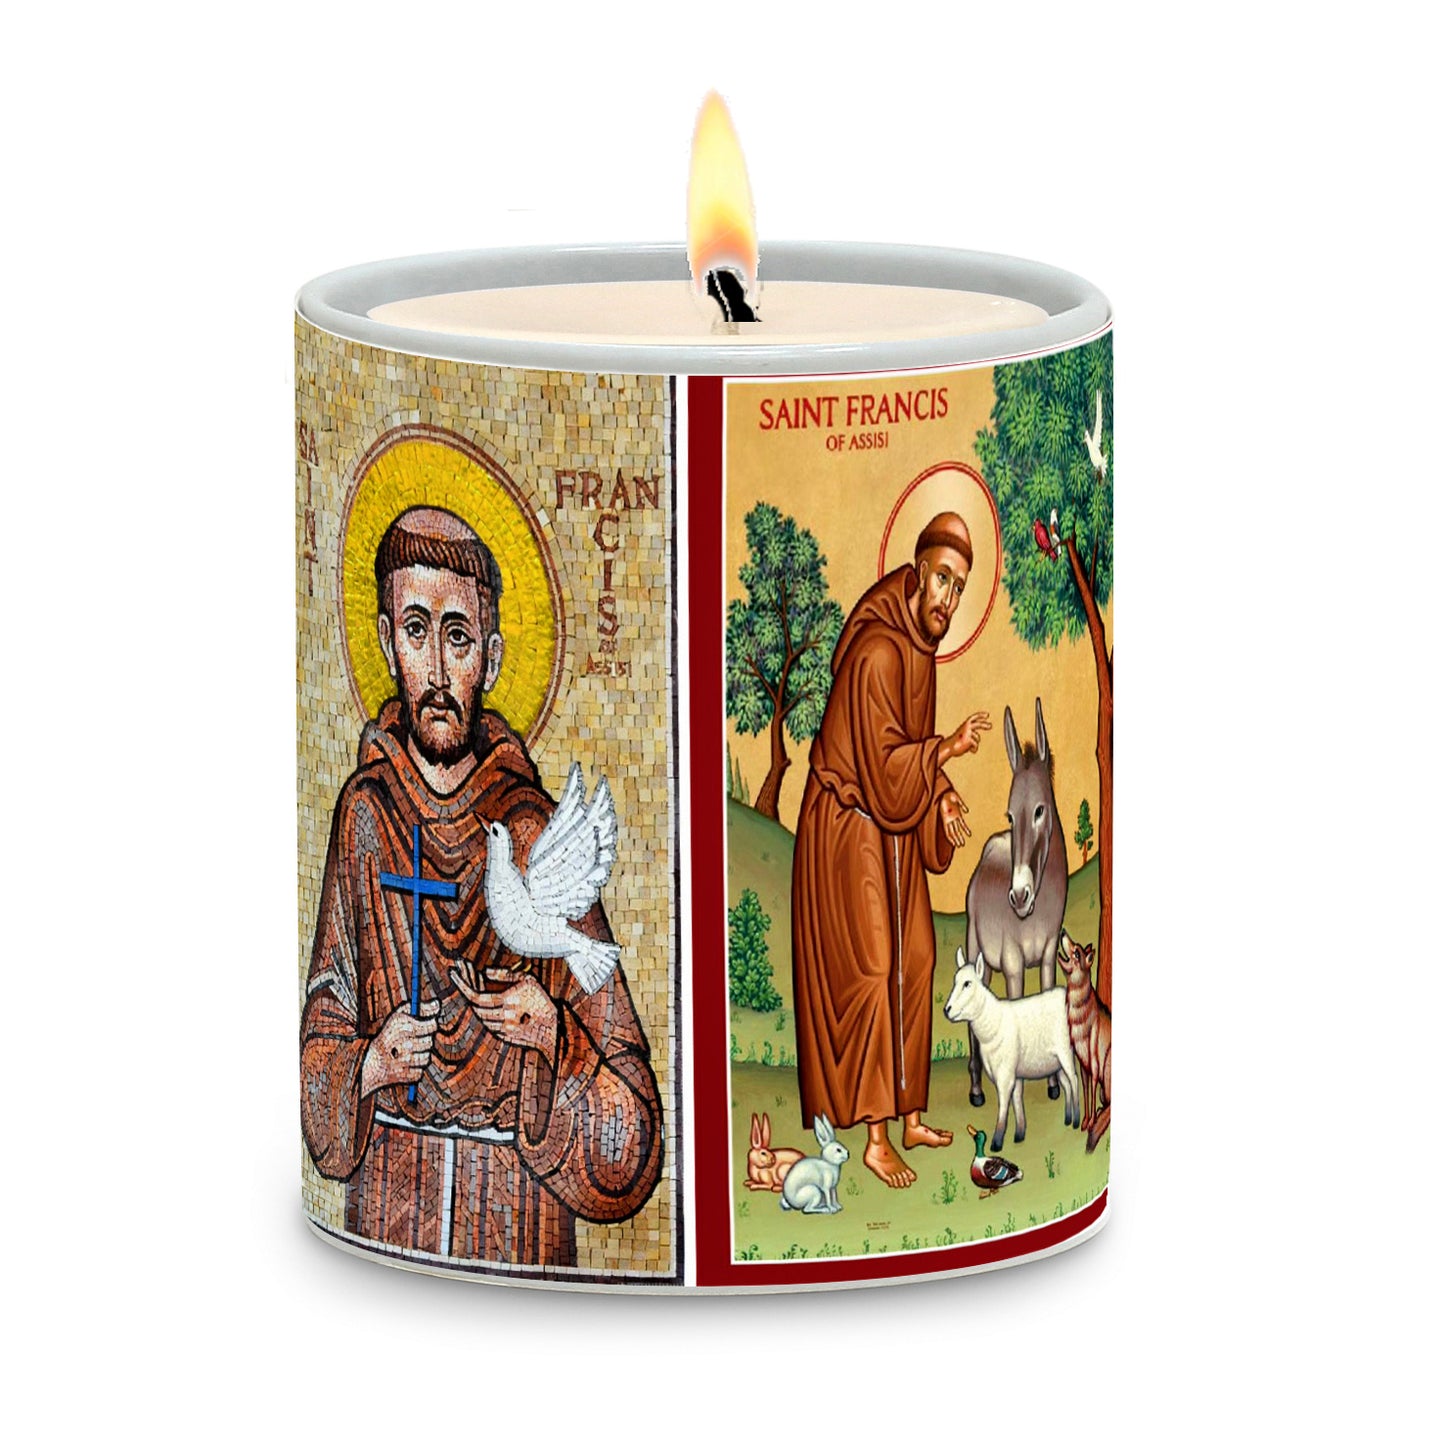 SUBLIMART: Prayer Candle - Porcelain Soy Wax Candle - St. Francis